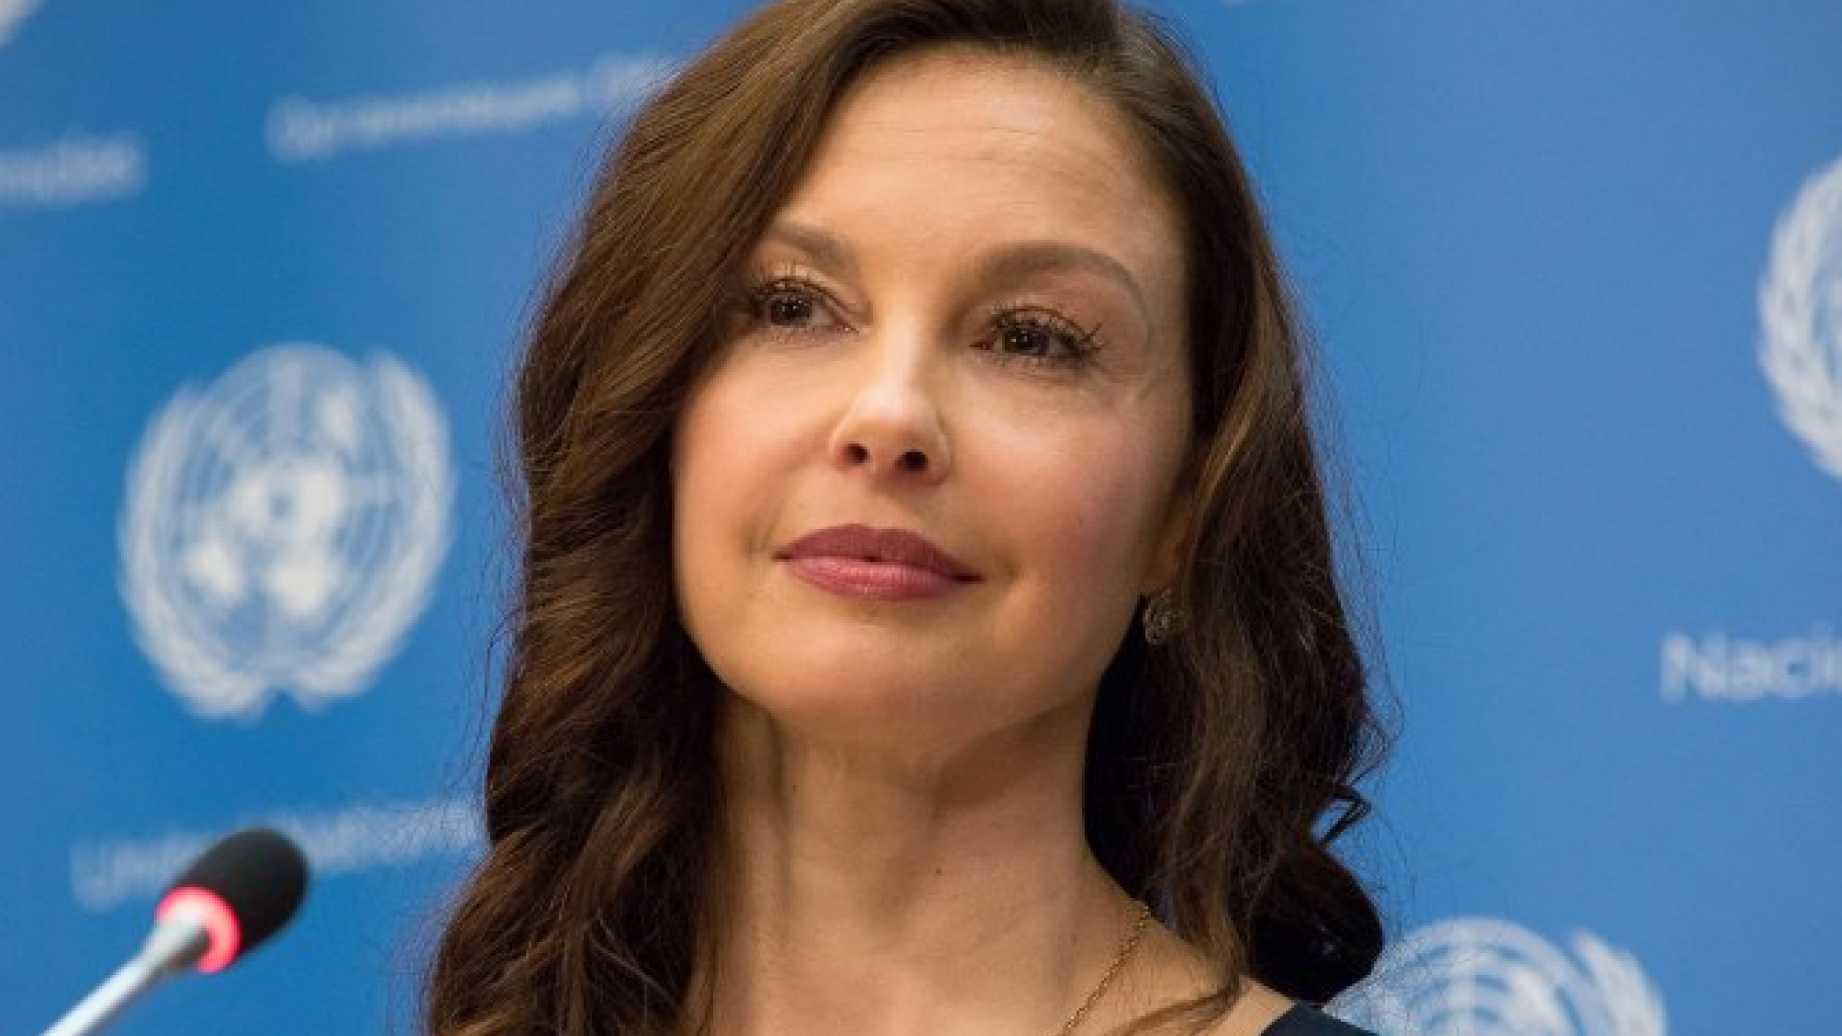 Actriz Ashley Judd presenta demanda contra exproductor Weinstein